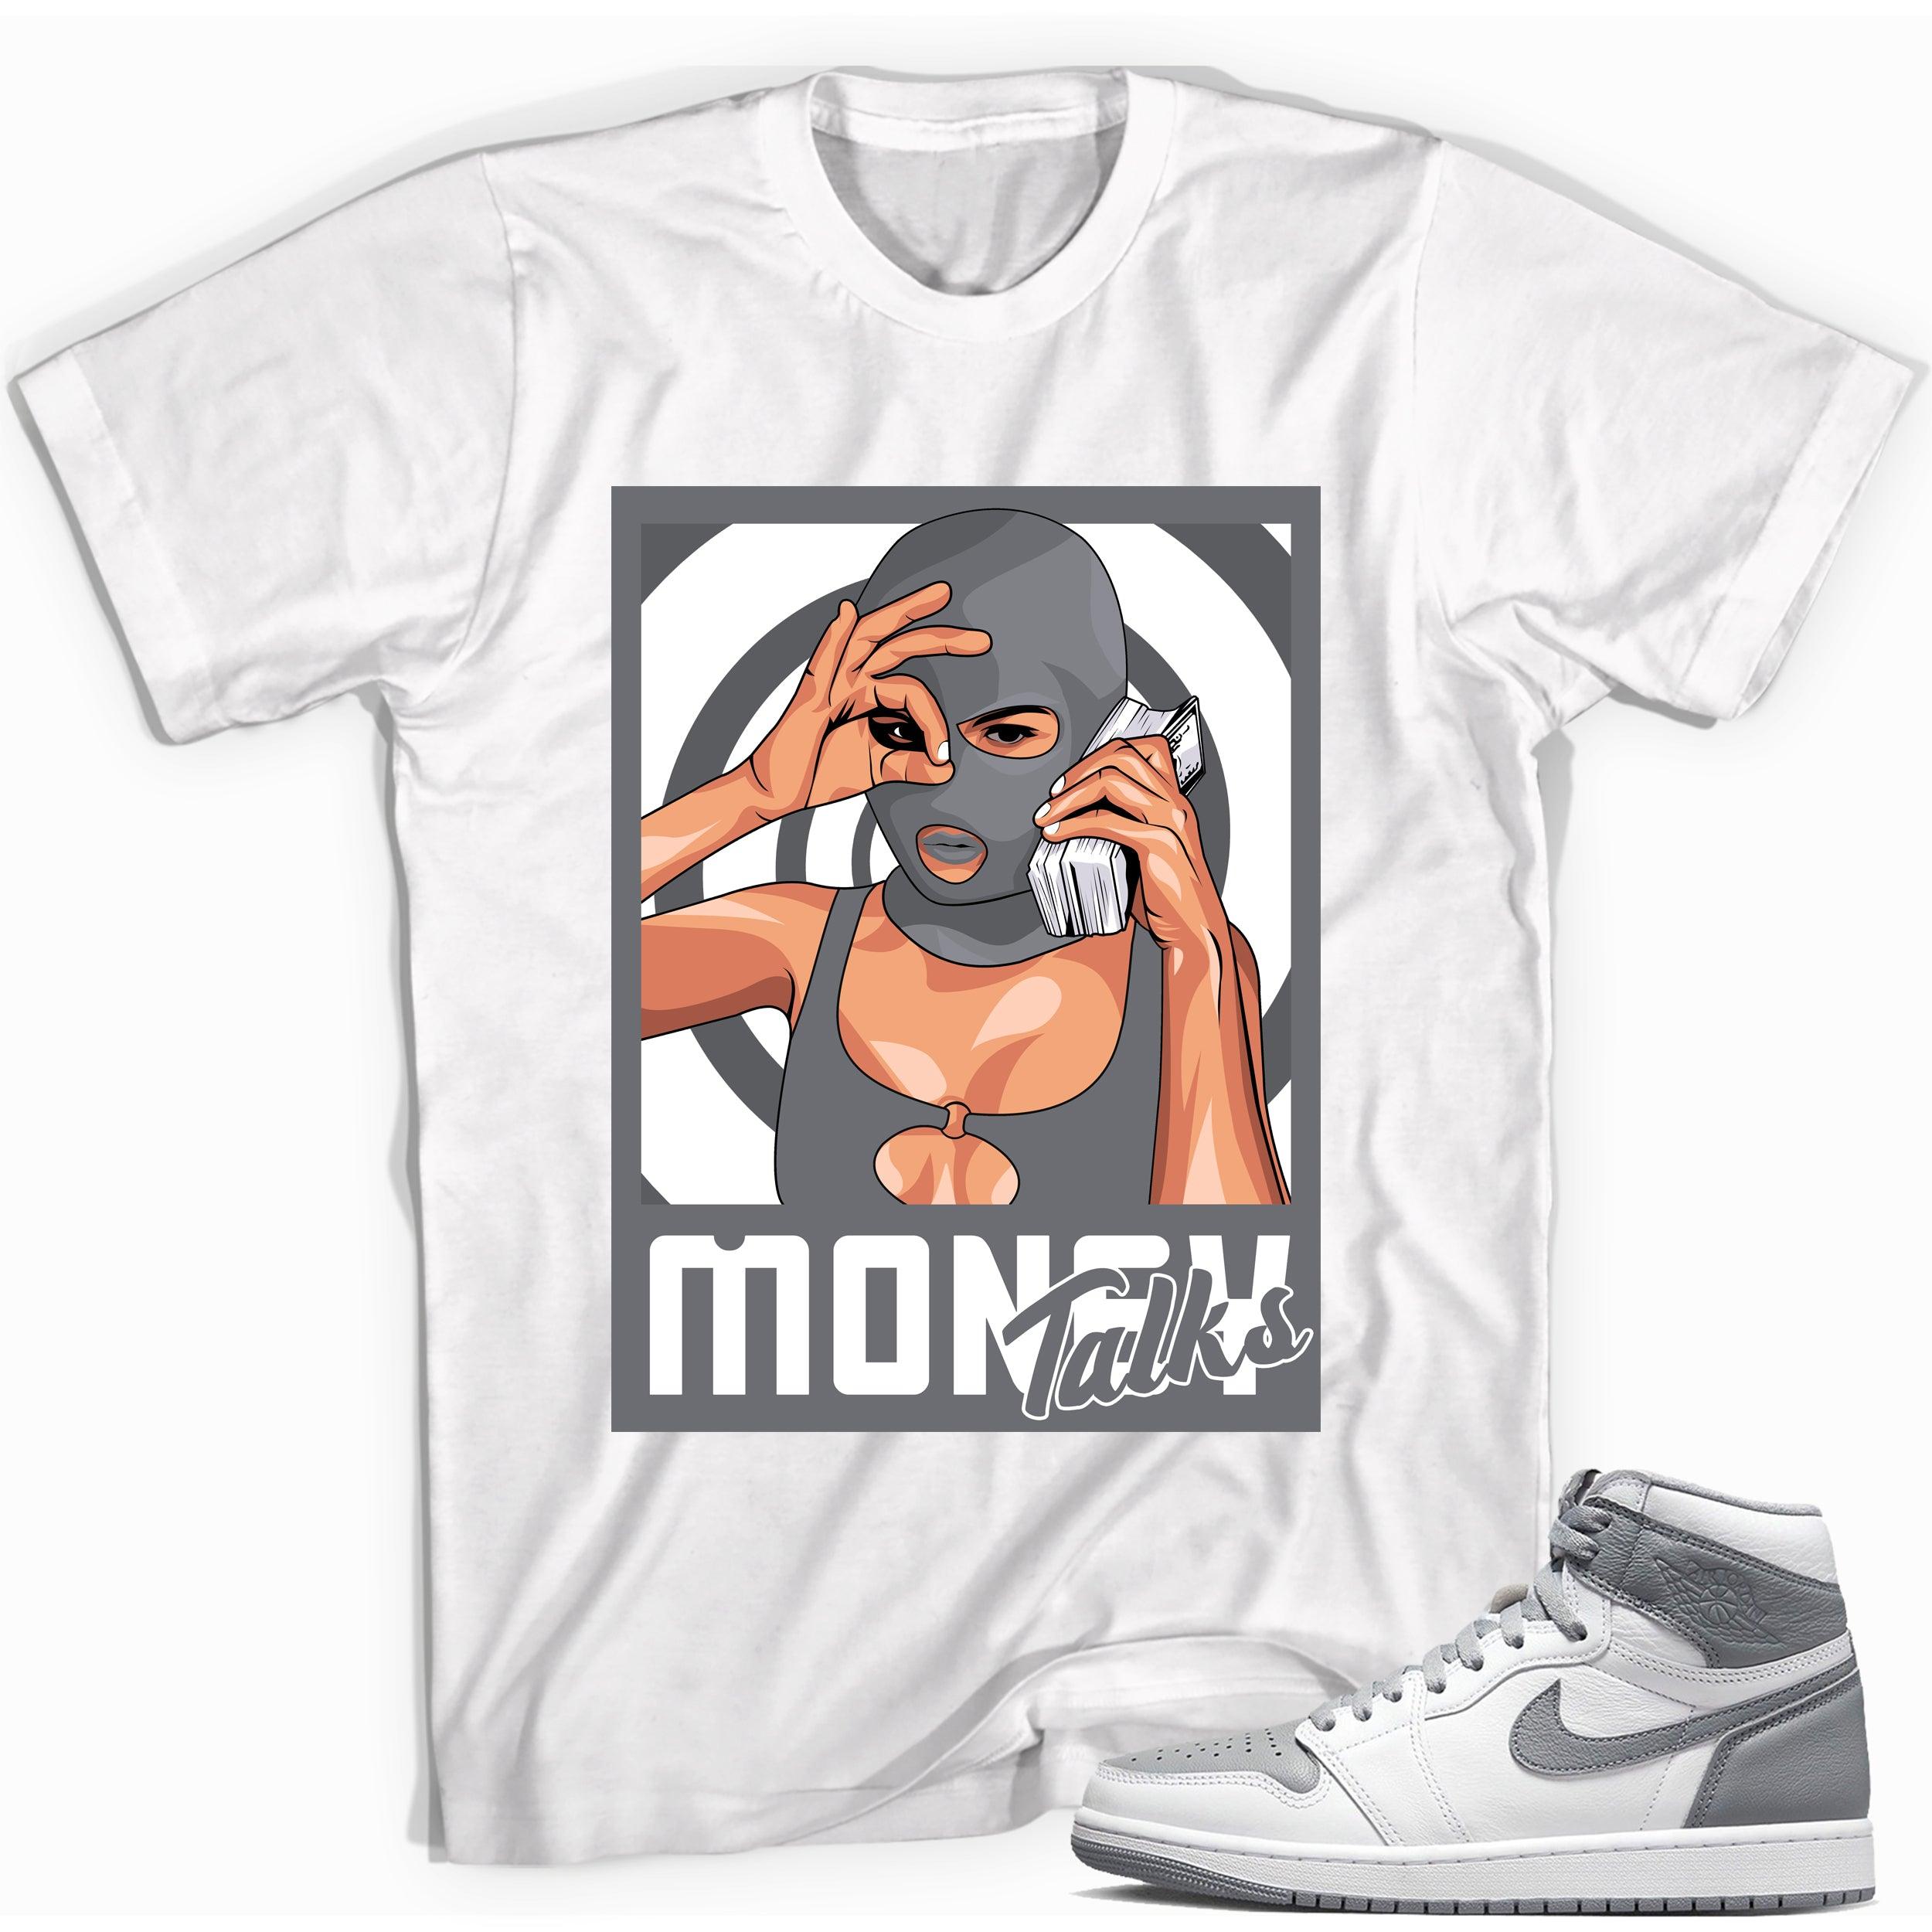 Money Talk Shirt for Jordan 1s photo